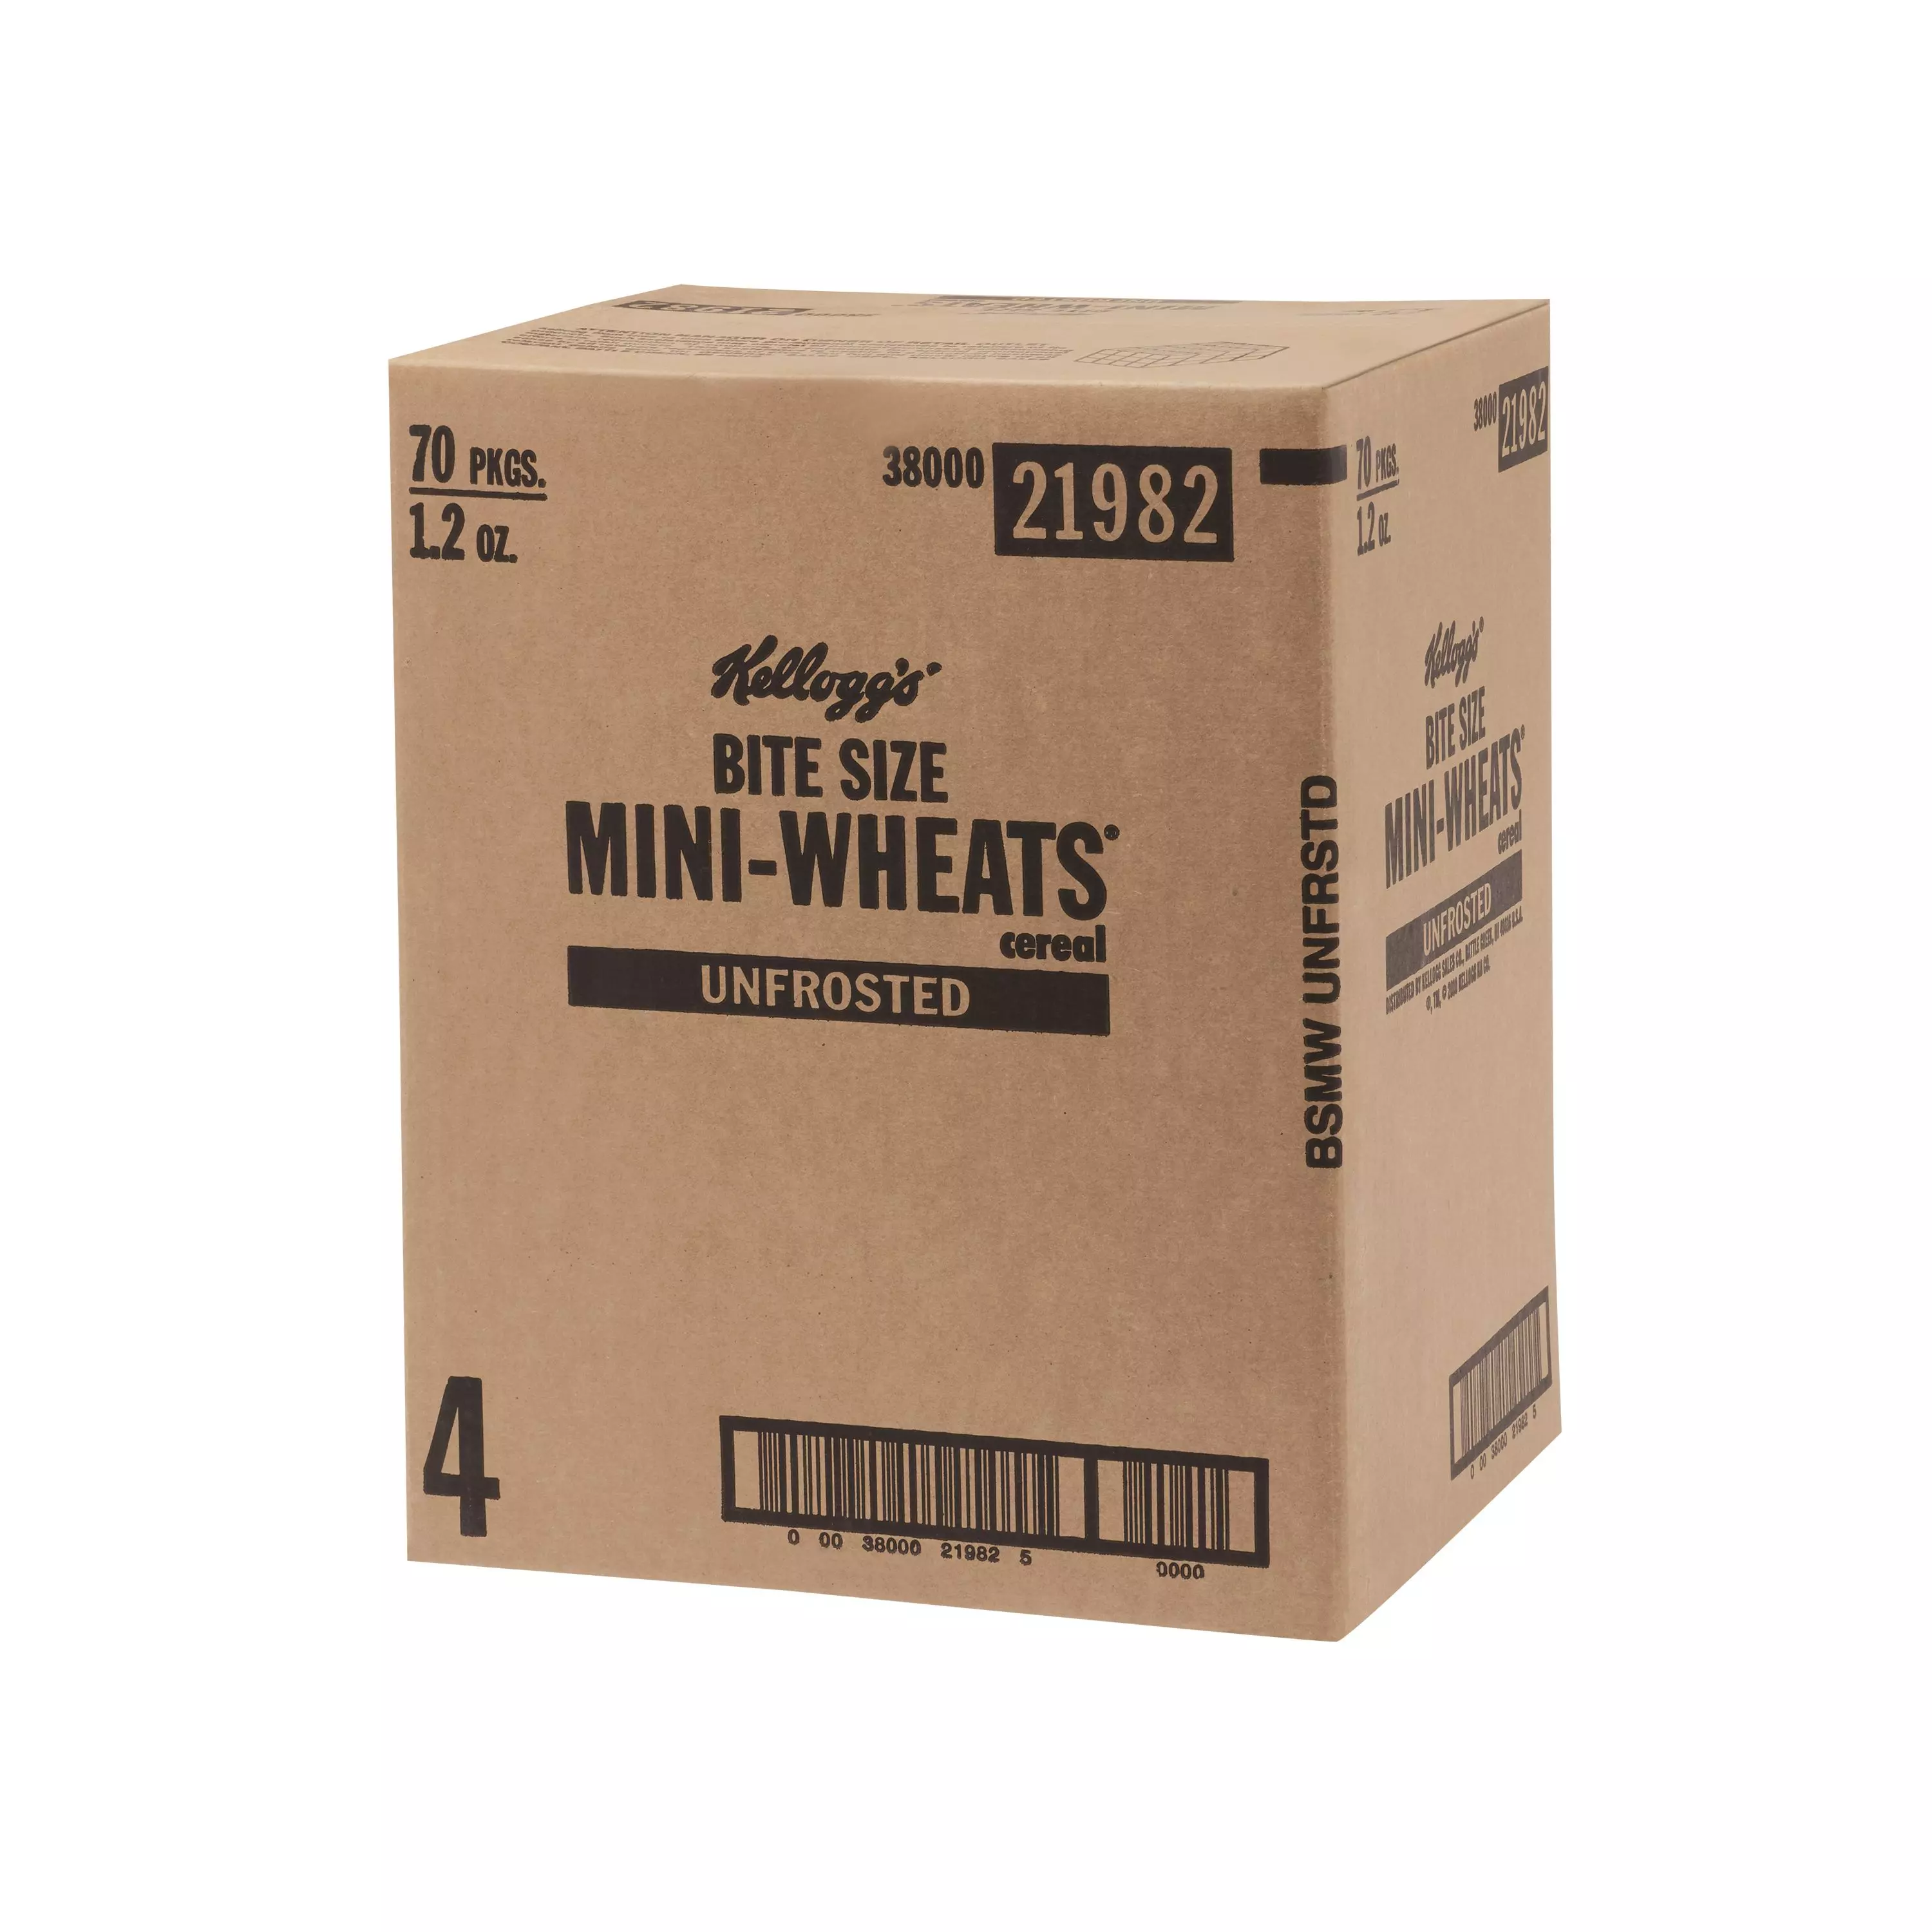 Kellogg’s Bite Size Unfrosted Mini-Wheats